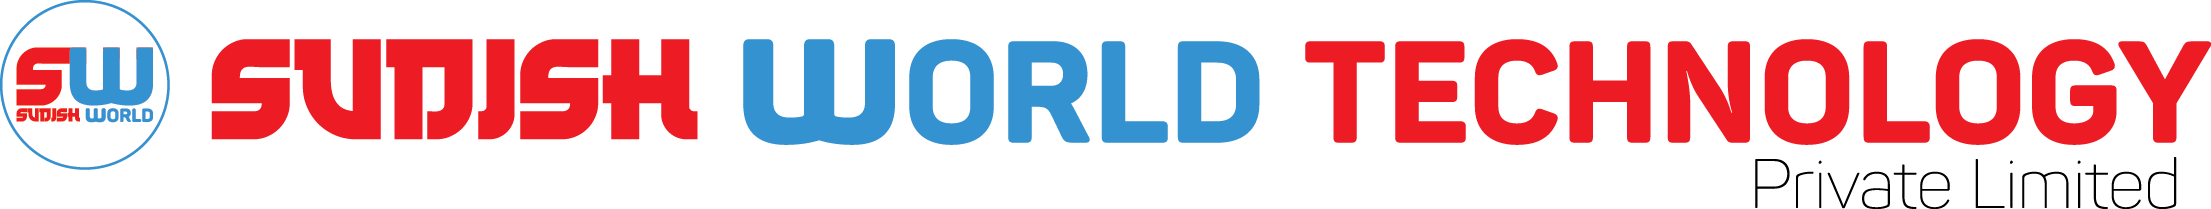 sudish-world-technology-logo